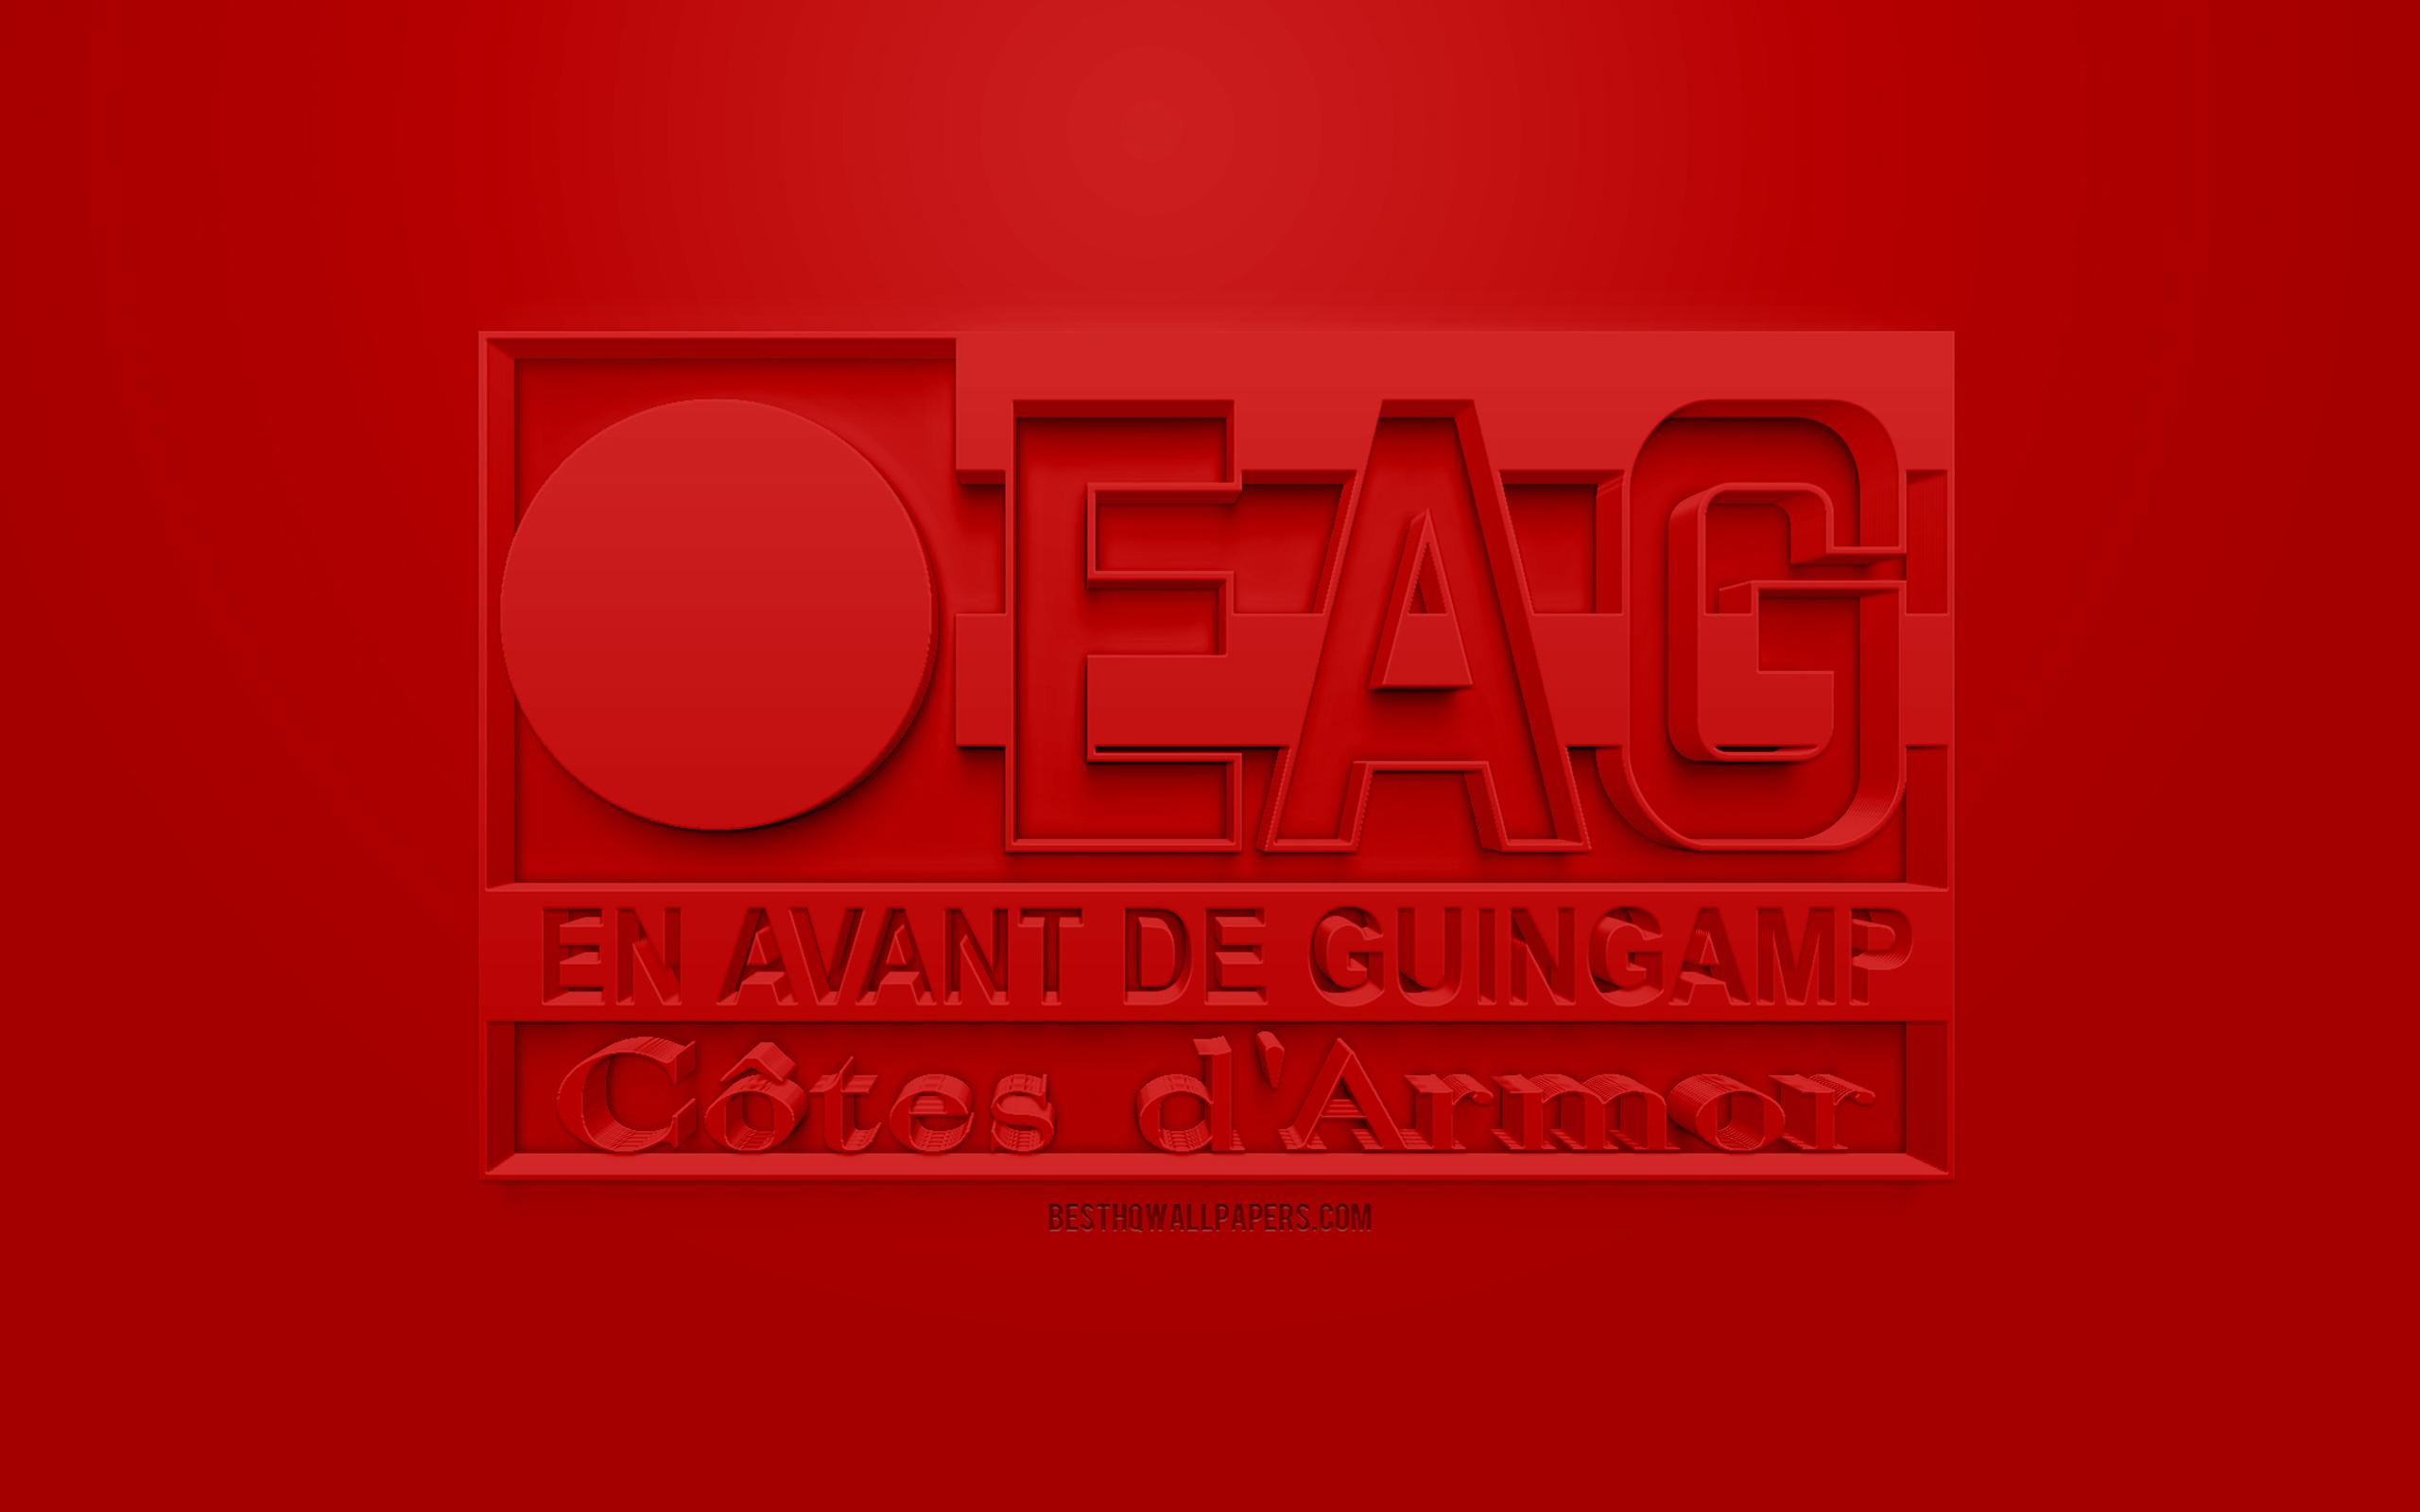 Download wallpaper En Avant de Guingamp, creative 3D logo, red